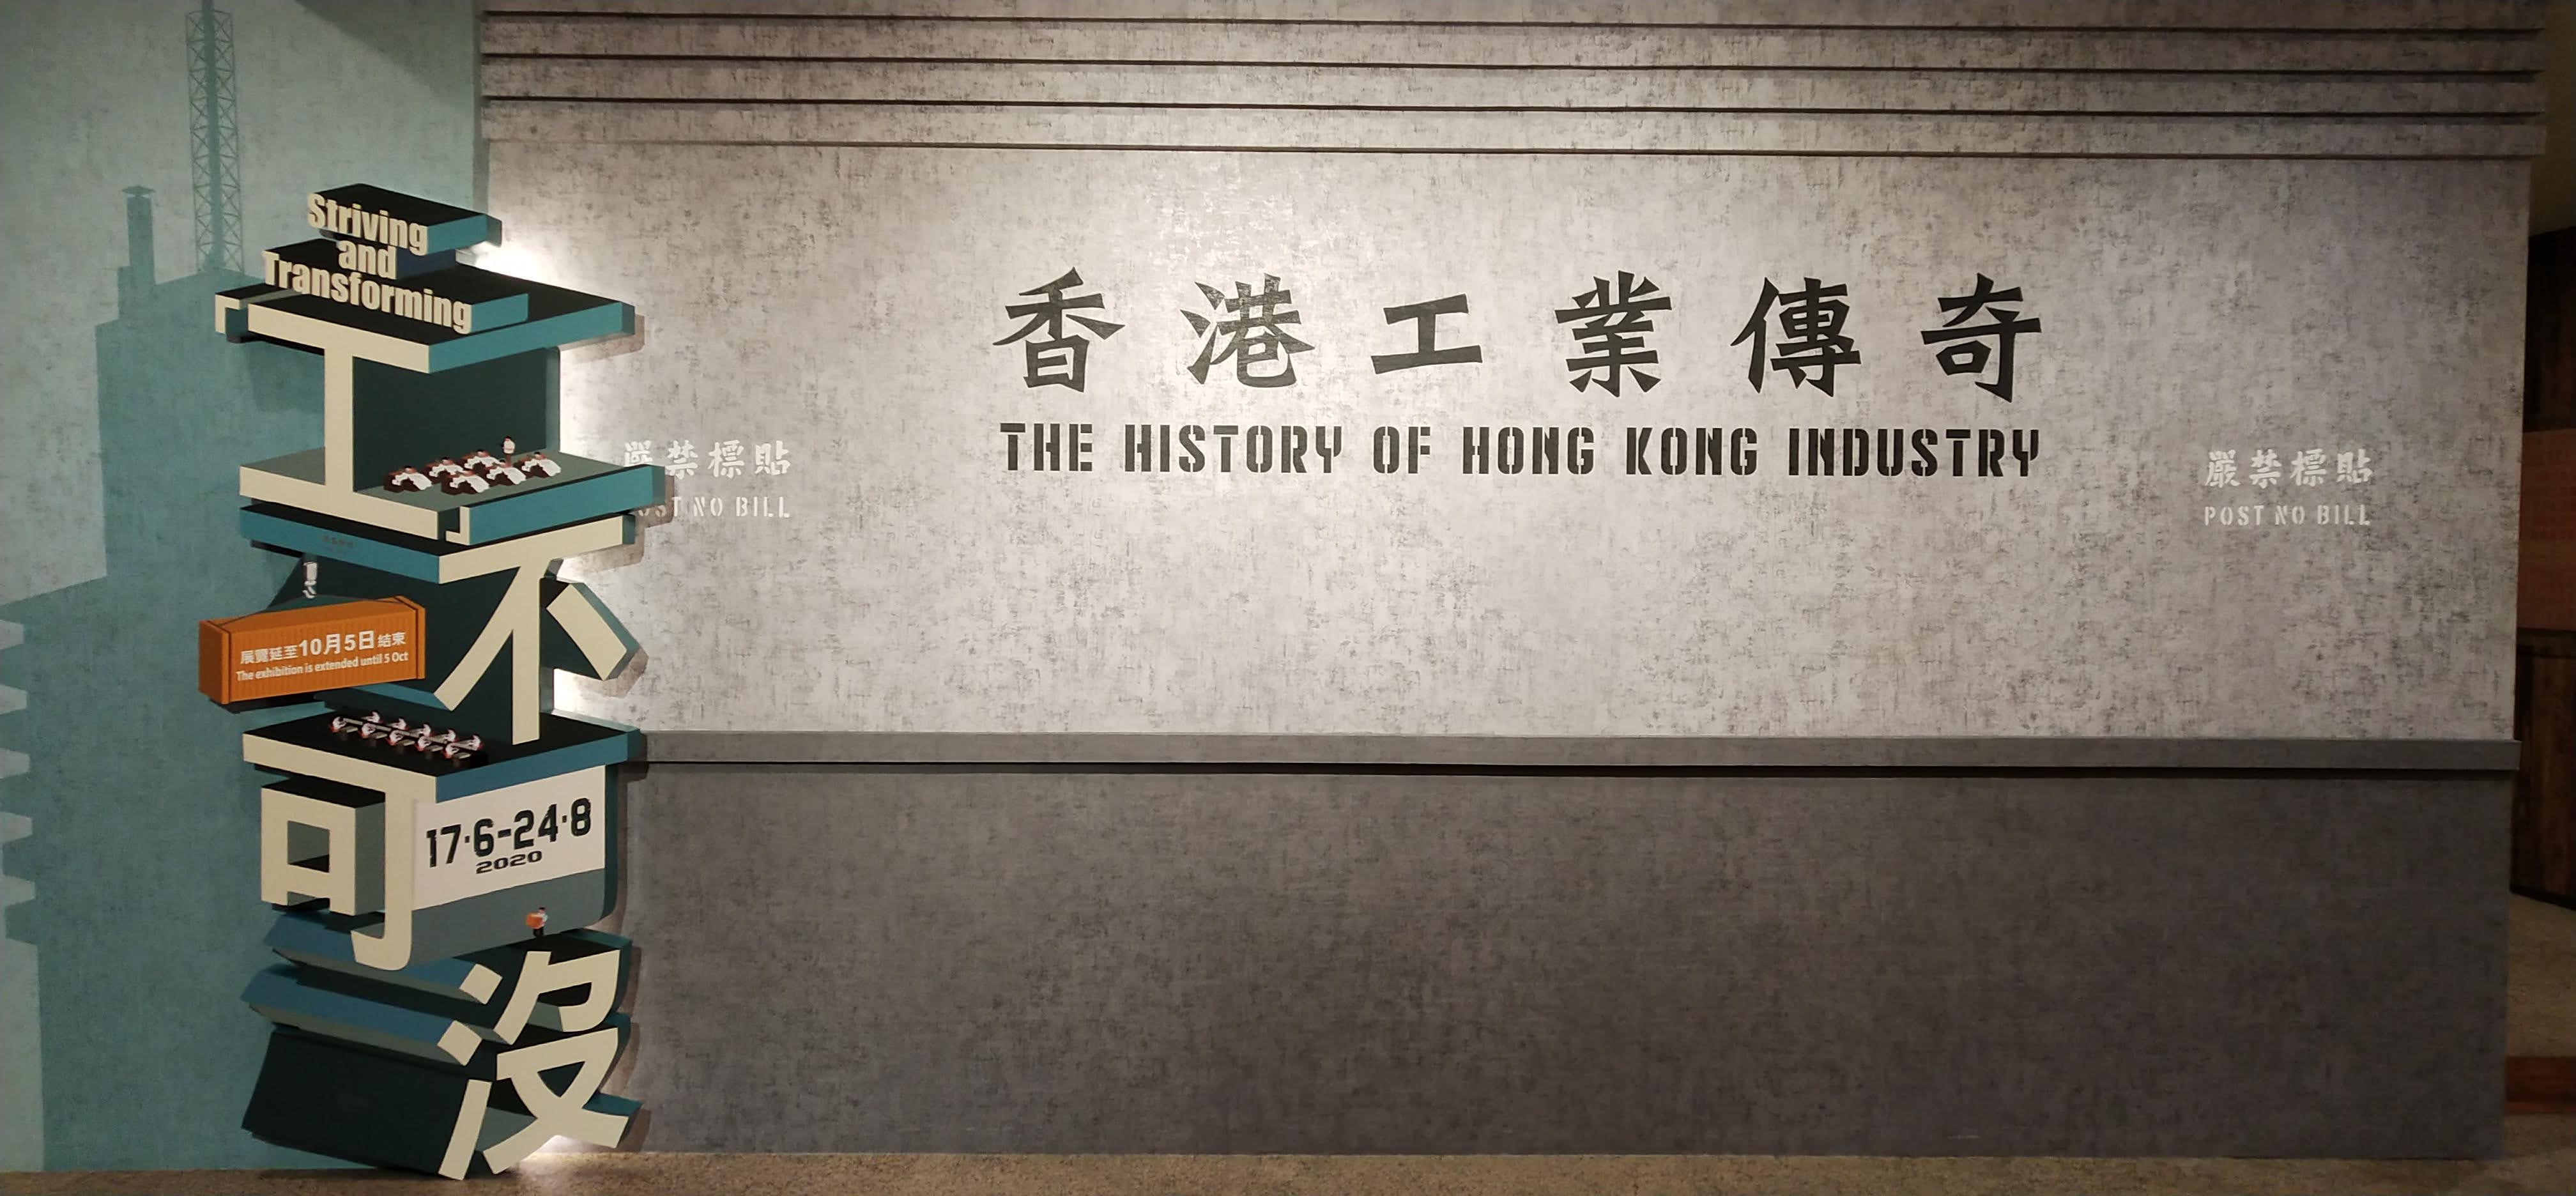 Exhibition for the history of Hong Kong industry at Hong Kong Museum of History